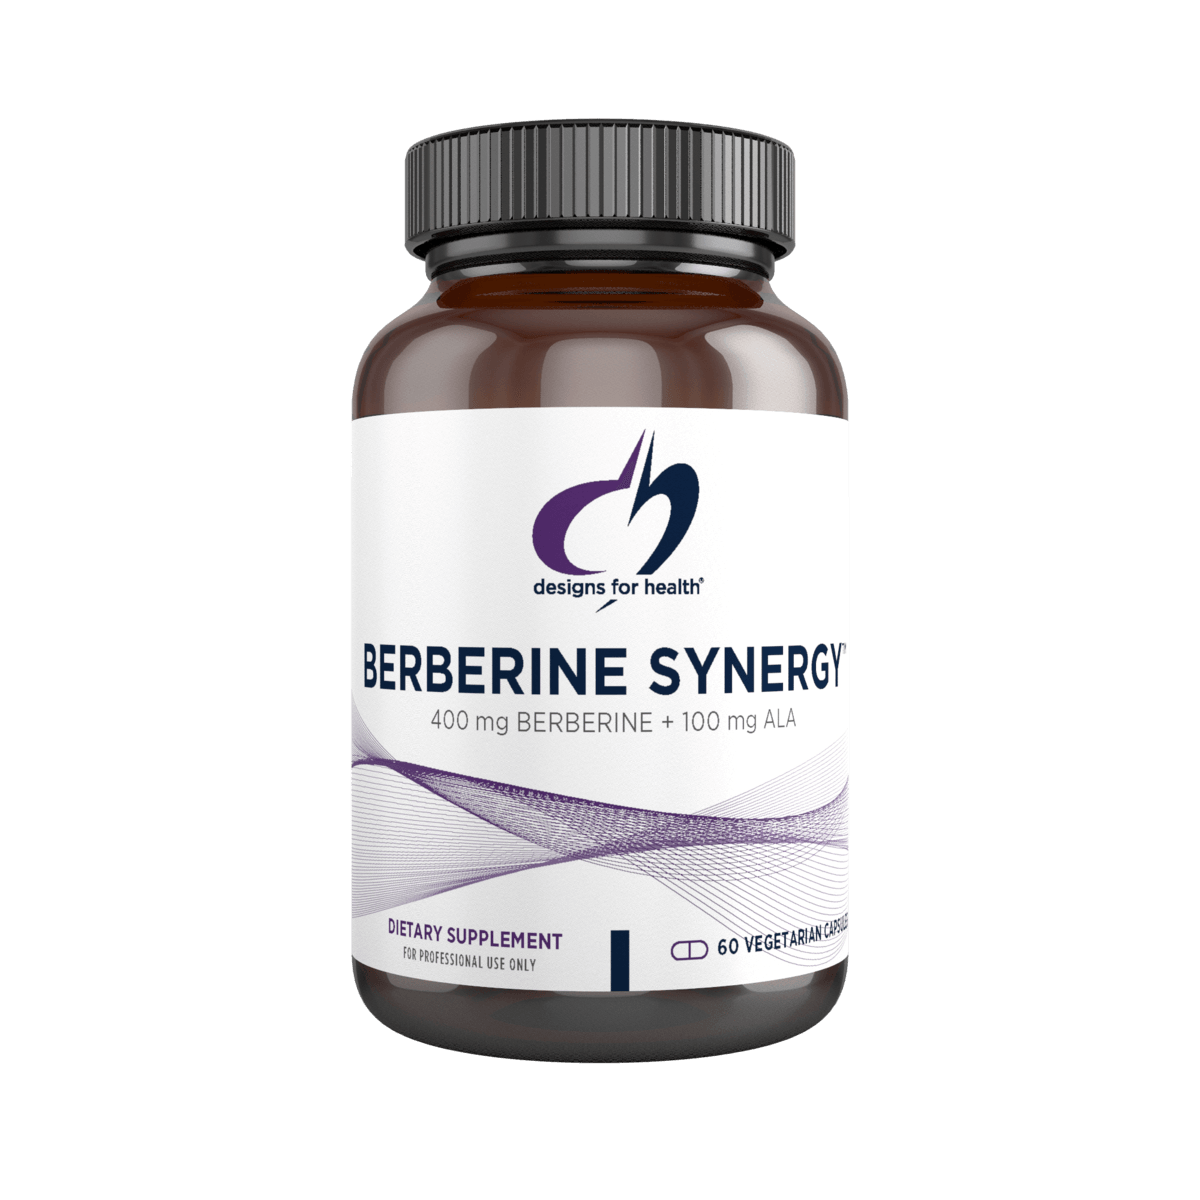 Berberine Synergy Design for Health (DFH)